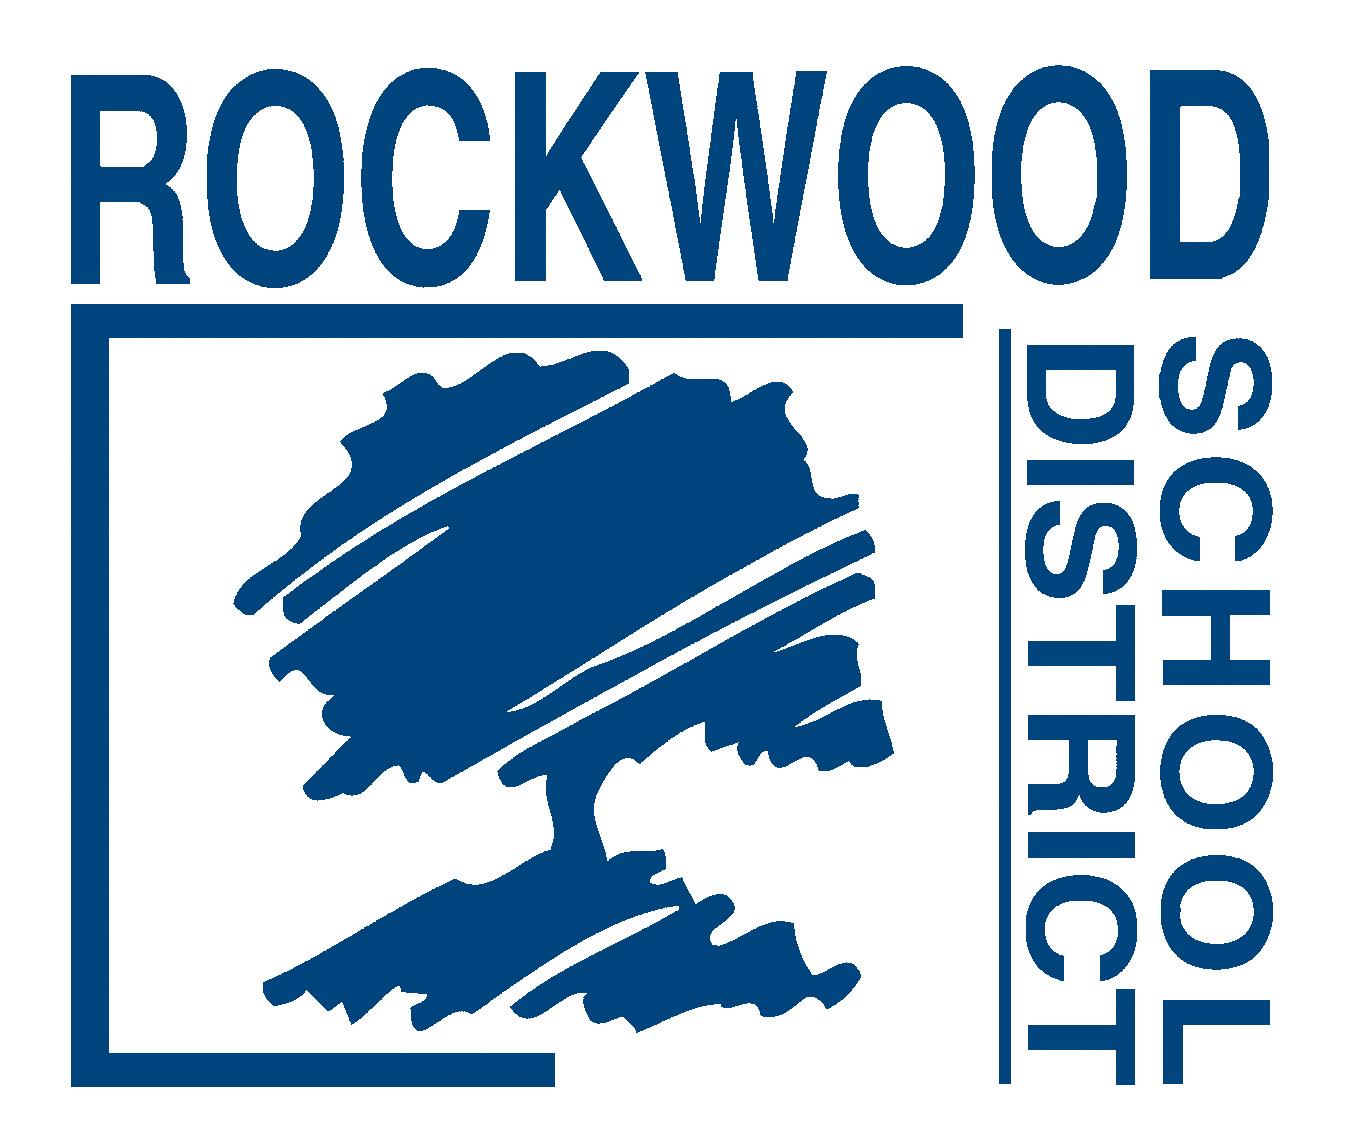 Rockwood Logo - Rockwood School District